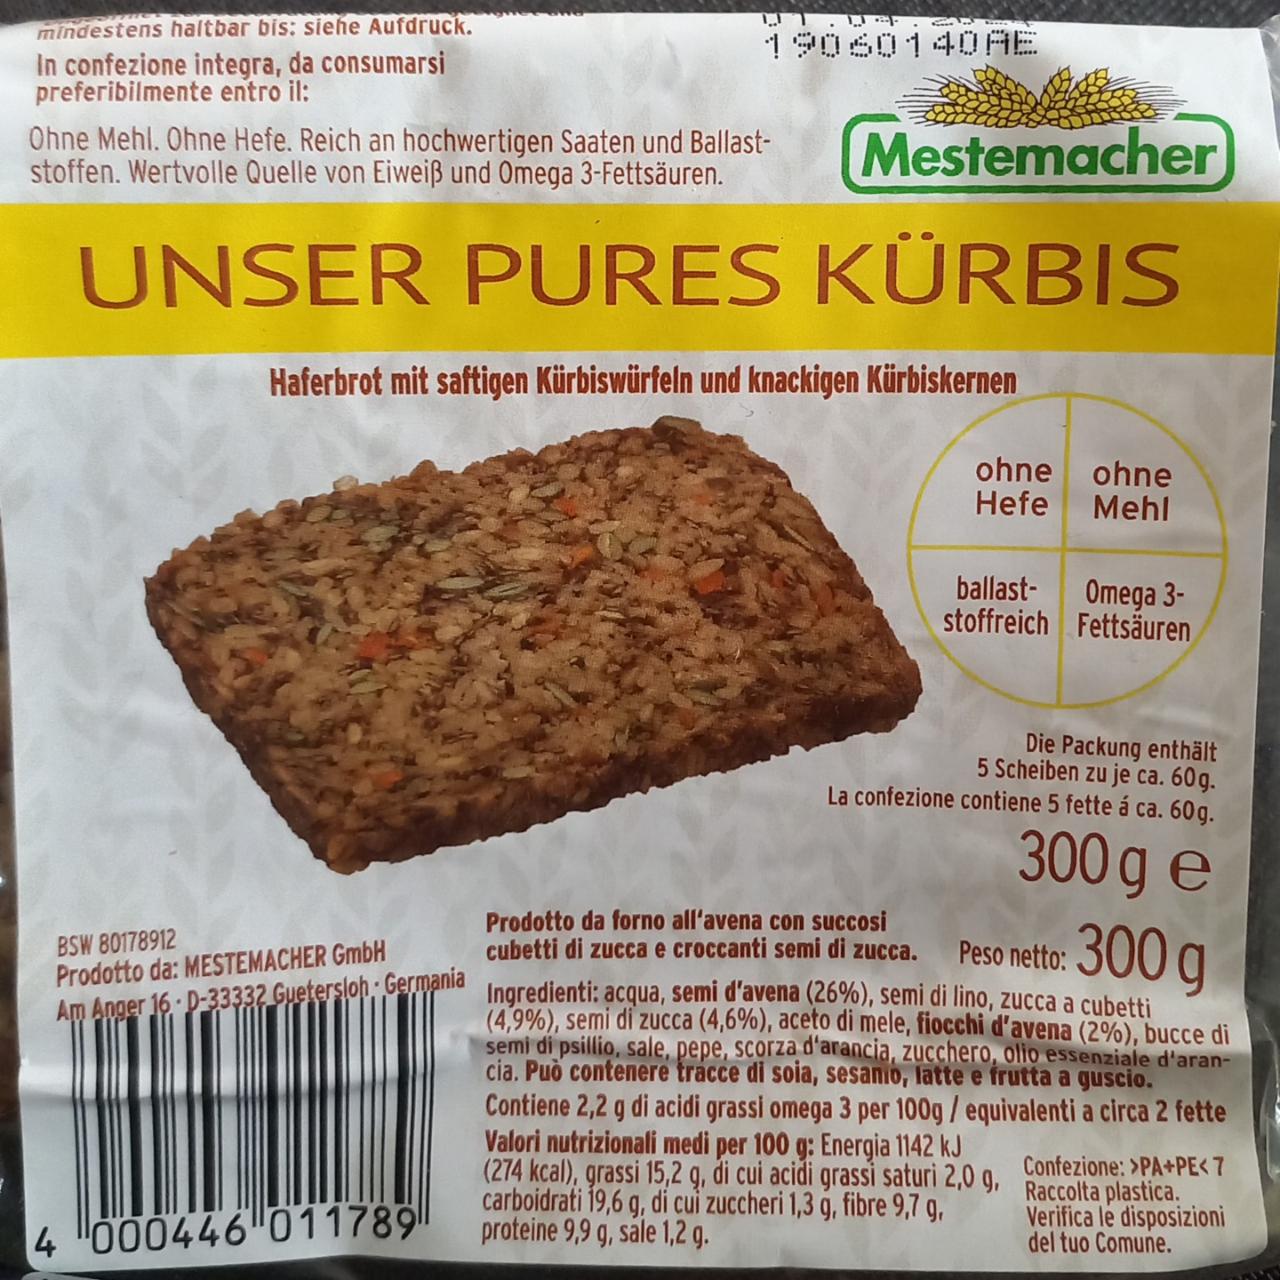 Fotografie - Unser pures kürbis Mestemacher